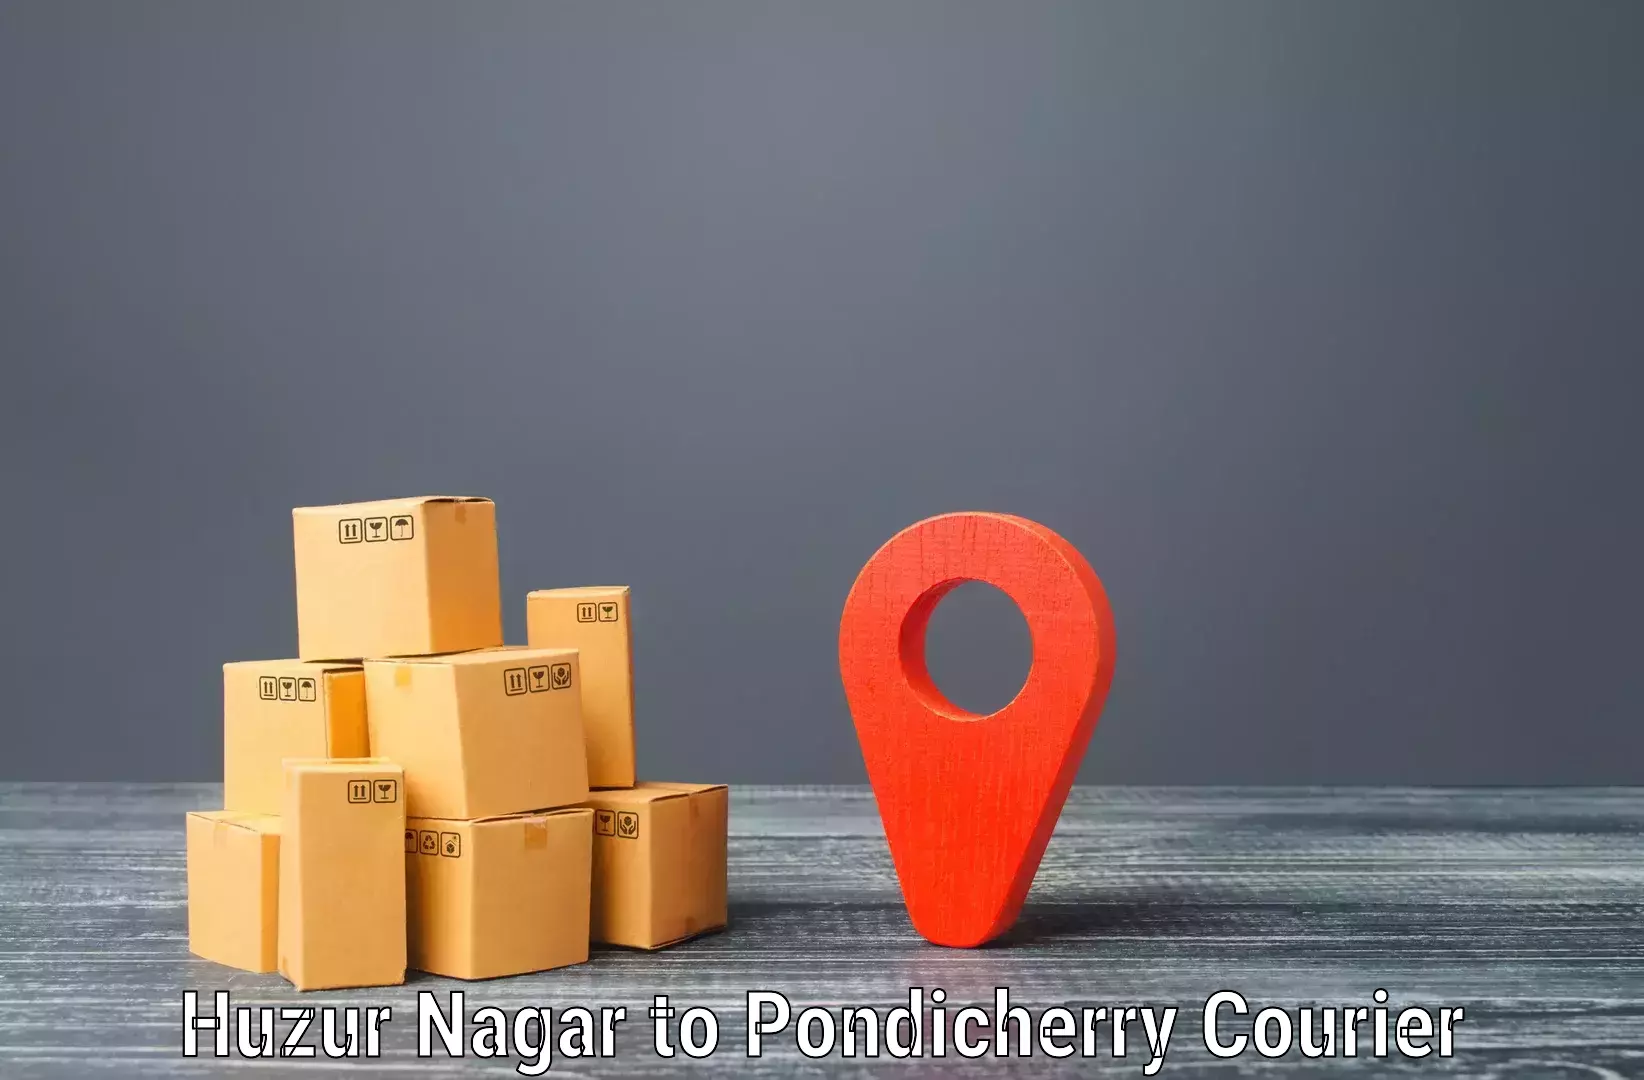 Next-day delivery options Huzur Nagar to Pondicherry